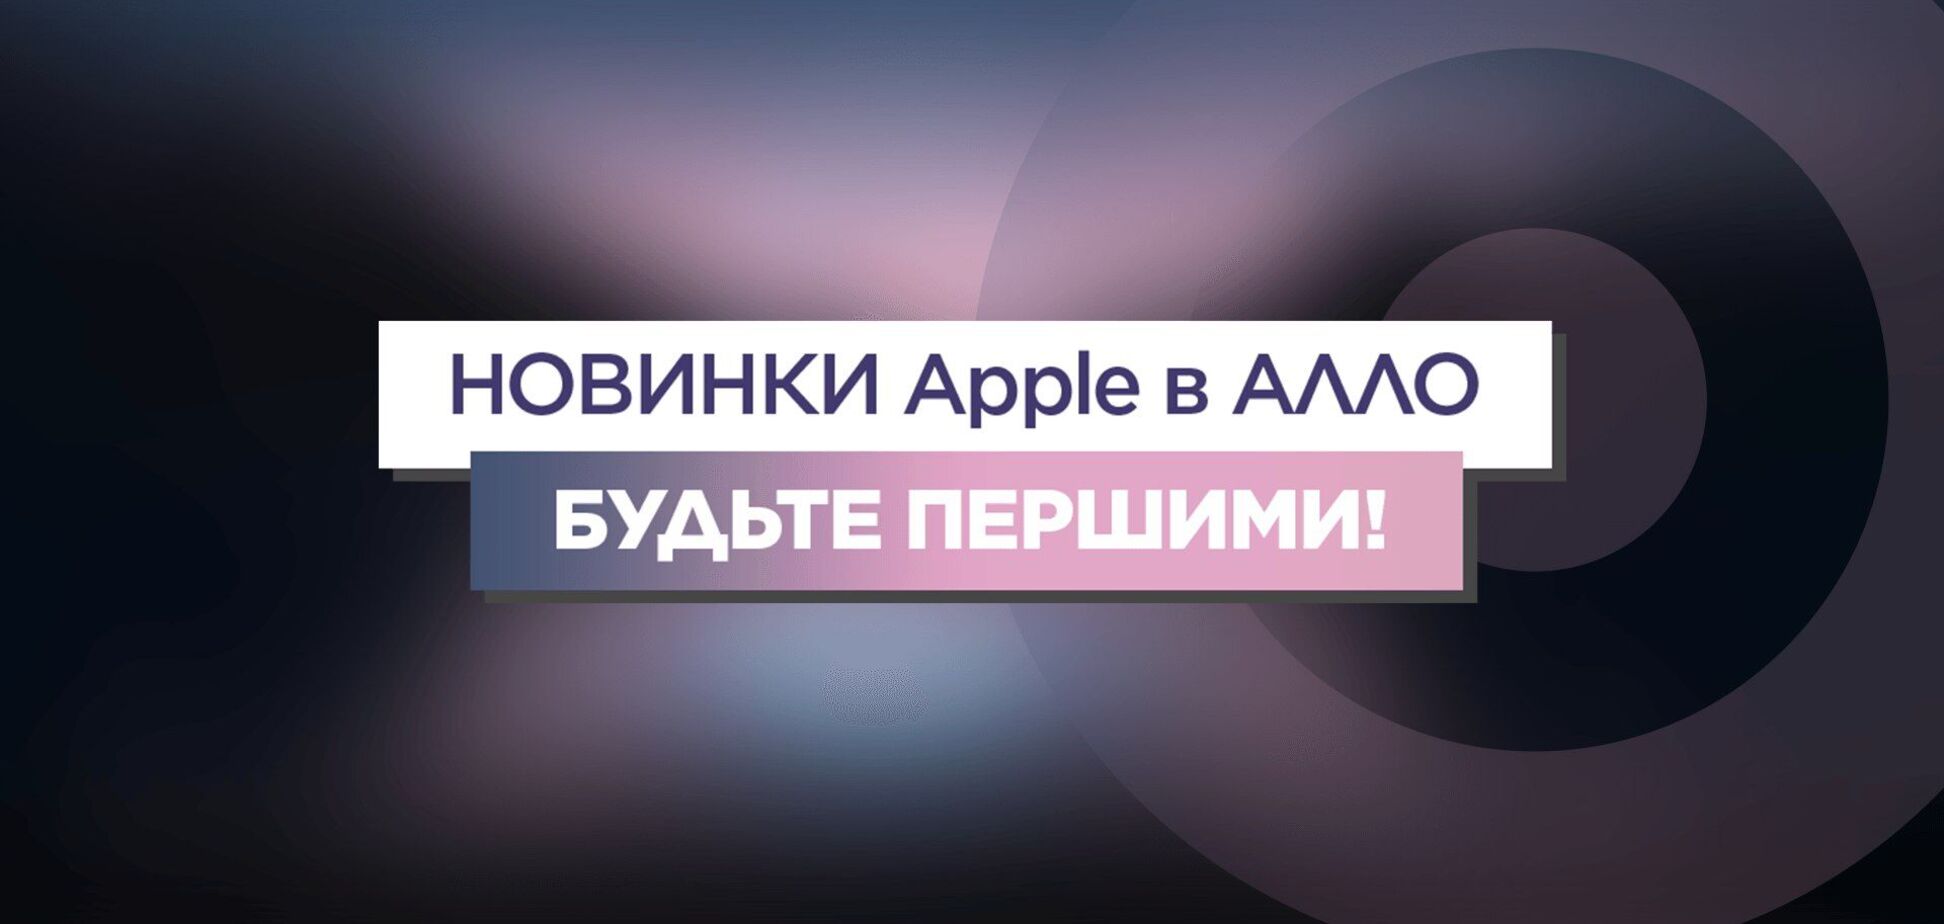 АЛЛО: цены на iPhone 13 в Украине и итоги презентации новинок от Apple